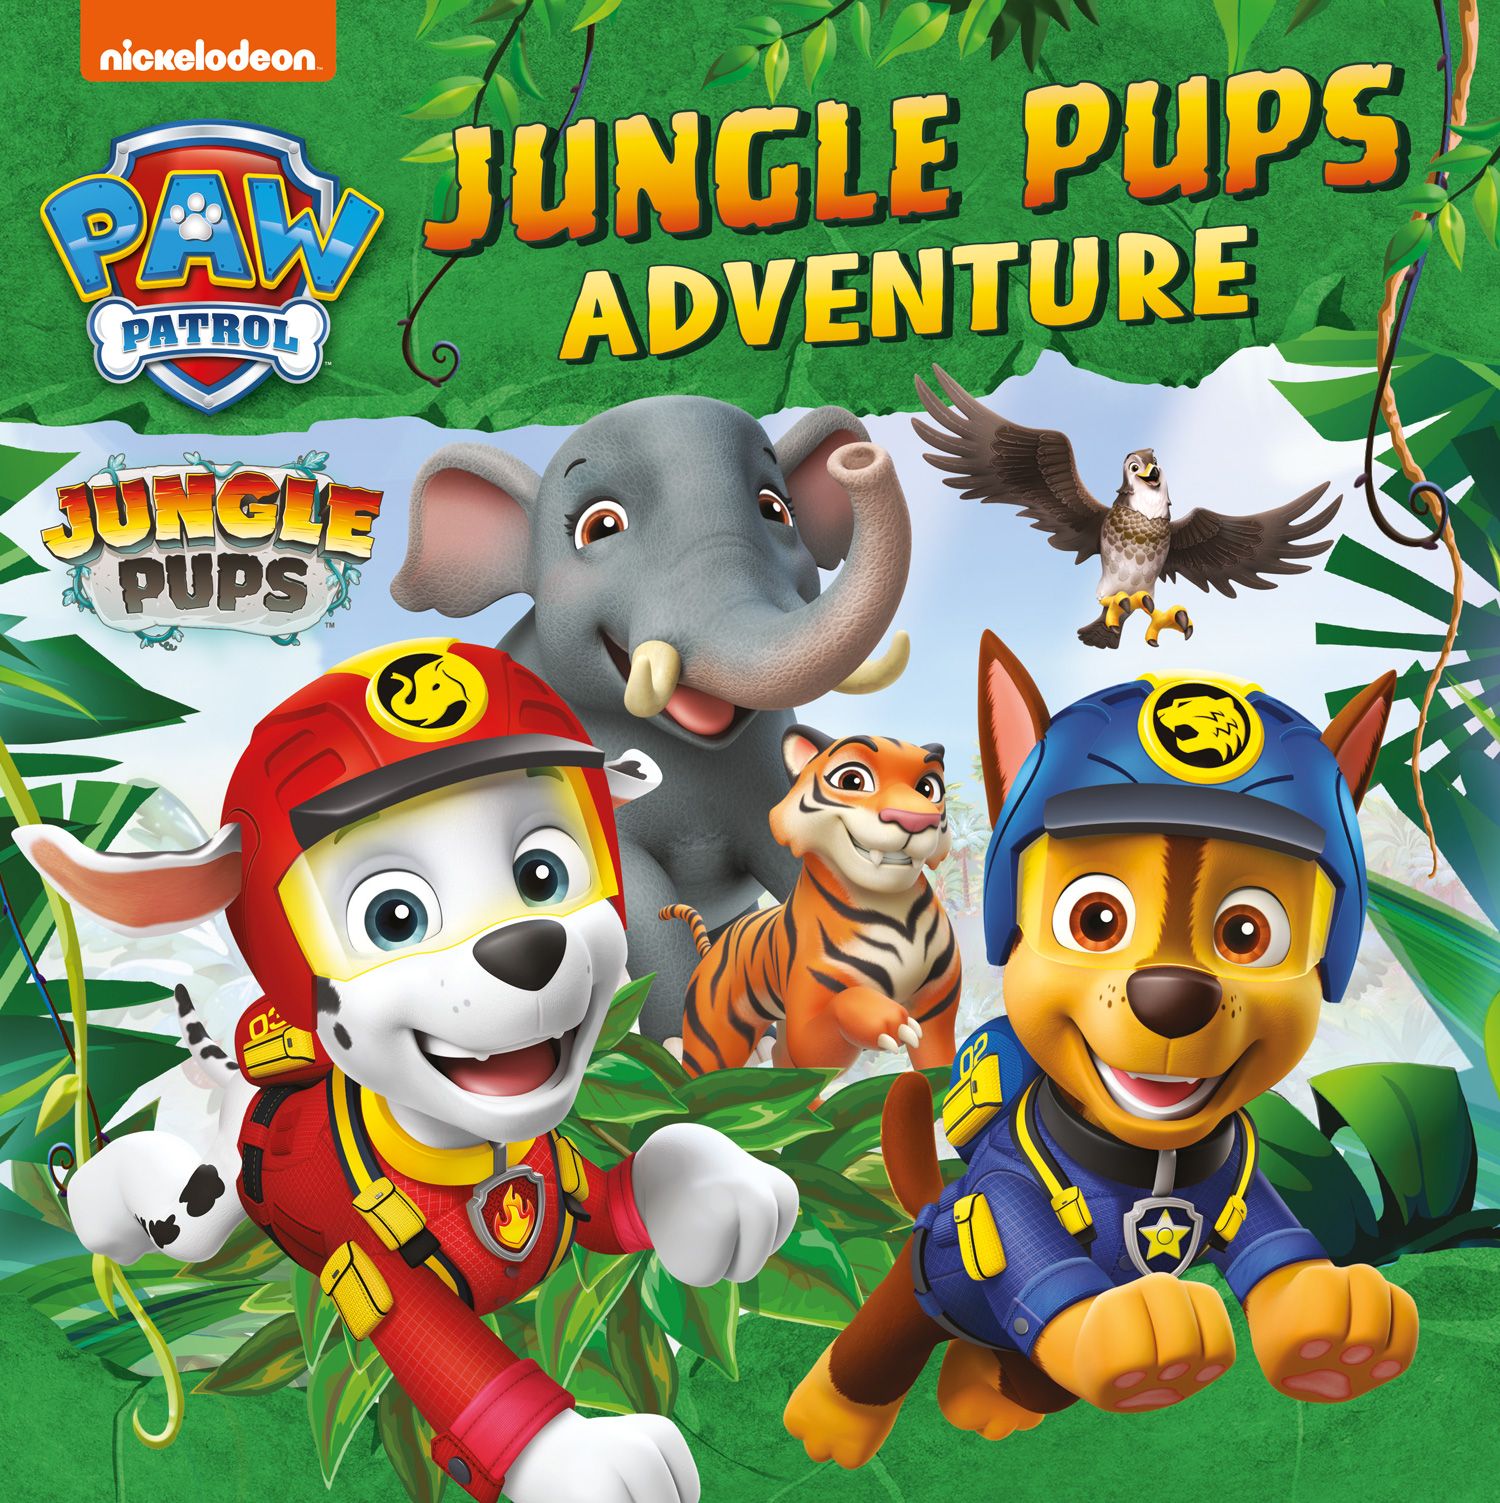 Jungle Pups Adventure, PAW Patrol Wiki